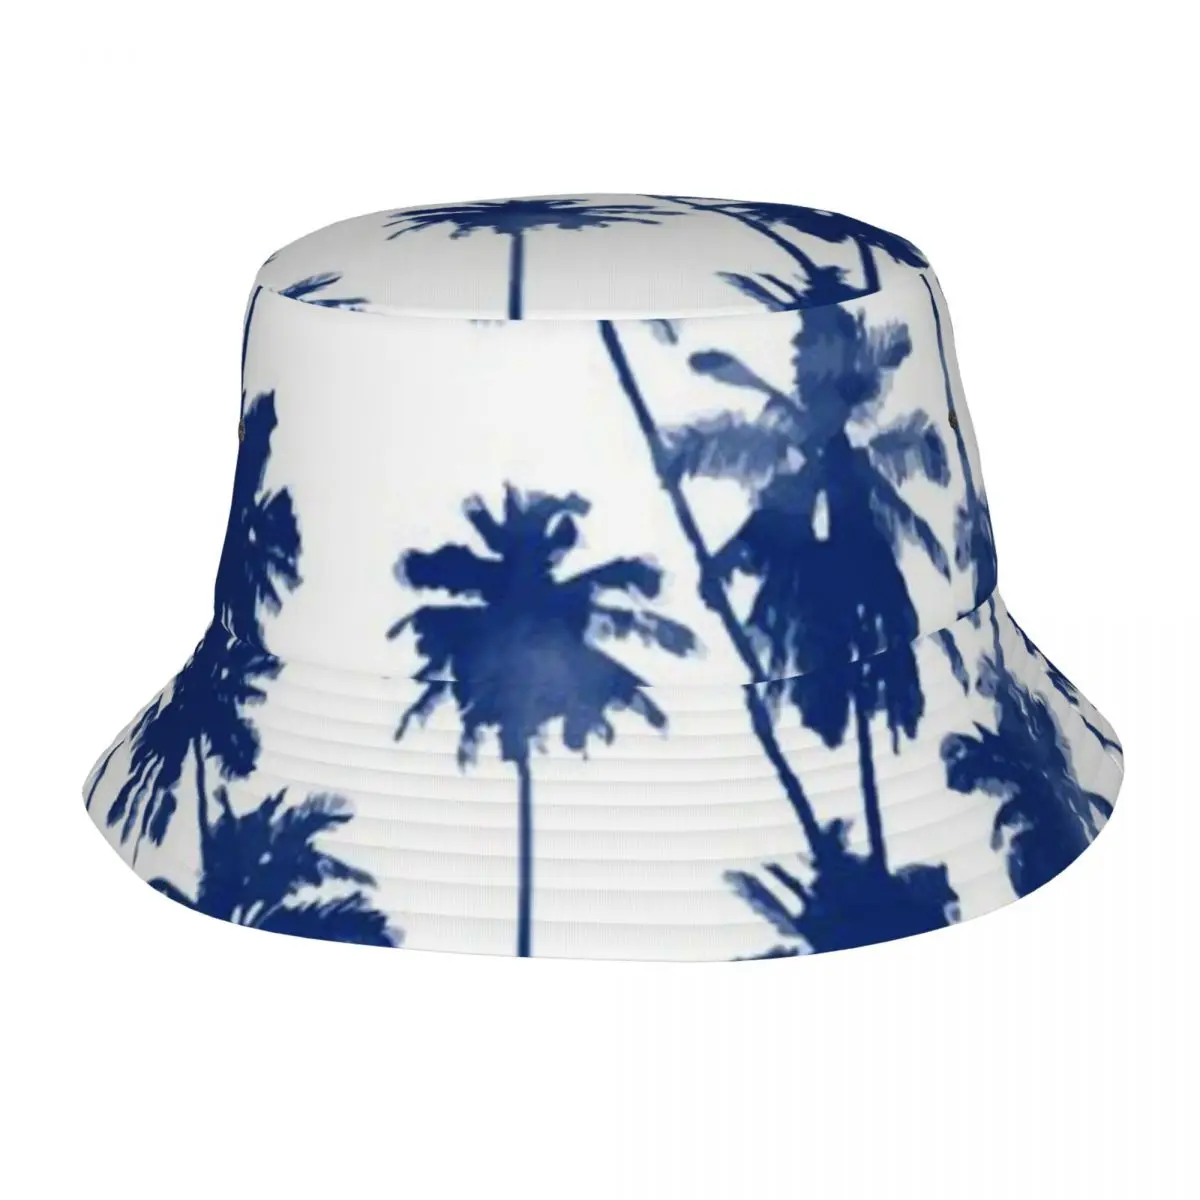 

Пляжная Панама унисекс с пальмами, Повседневная Панама от солнца, Кепка в стиле хип-хоп, для рыбаков